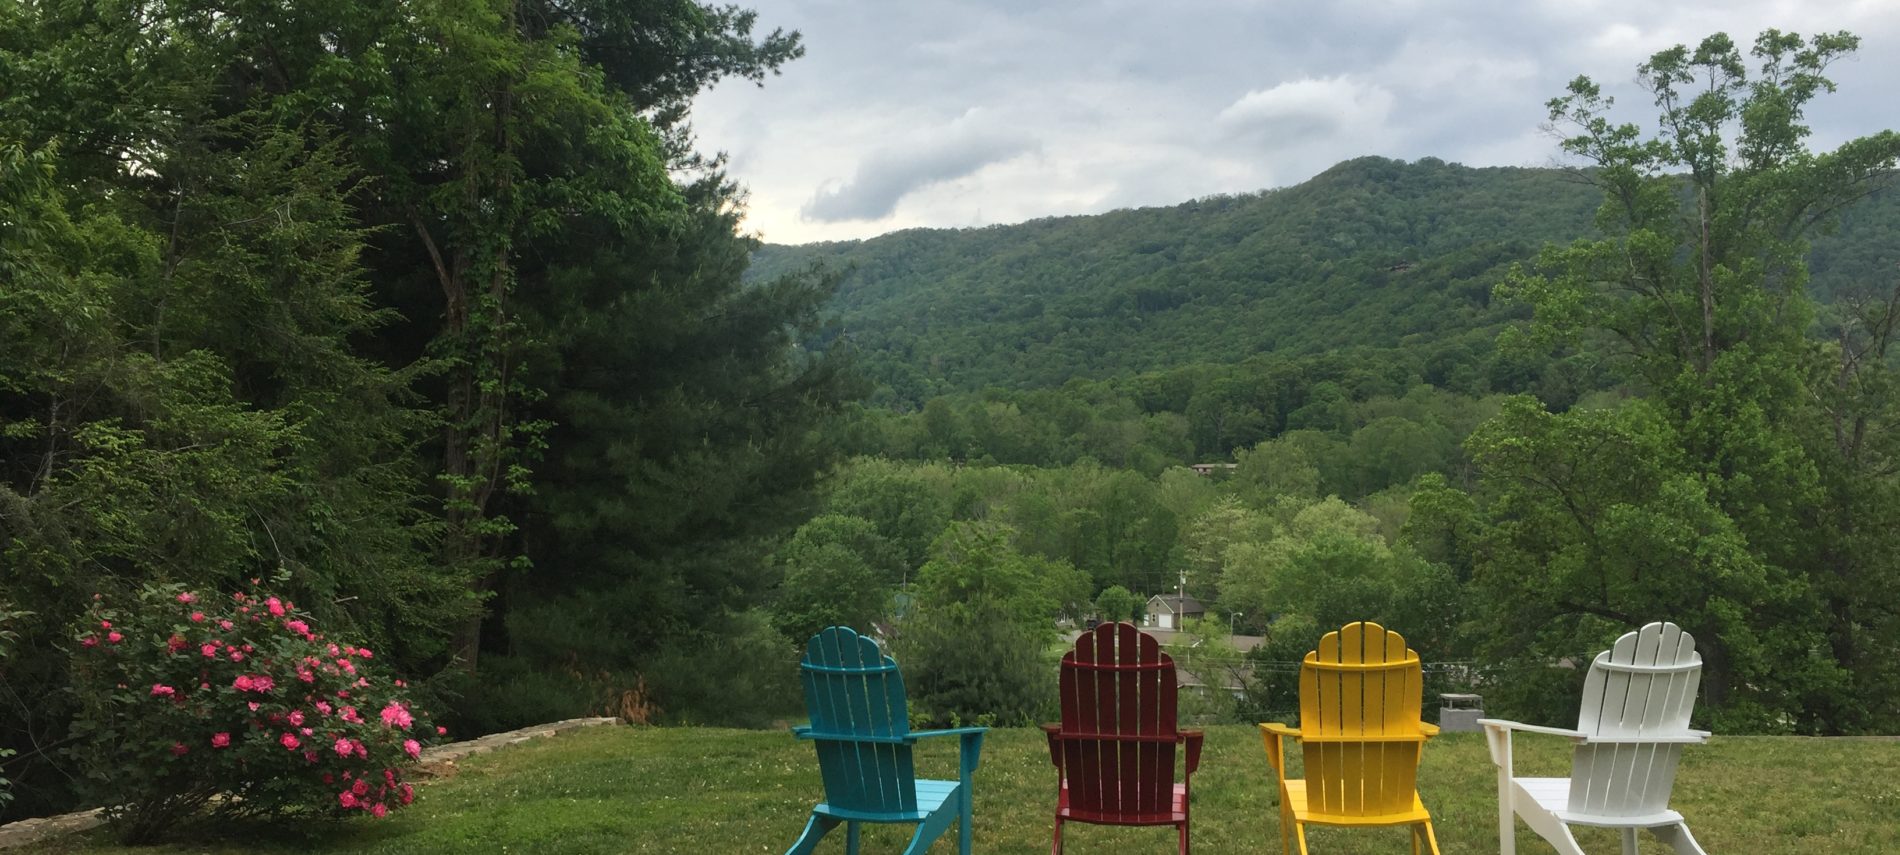 Adirondack chairs in the yard Andon reid